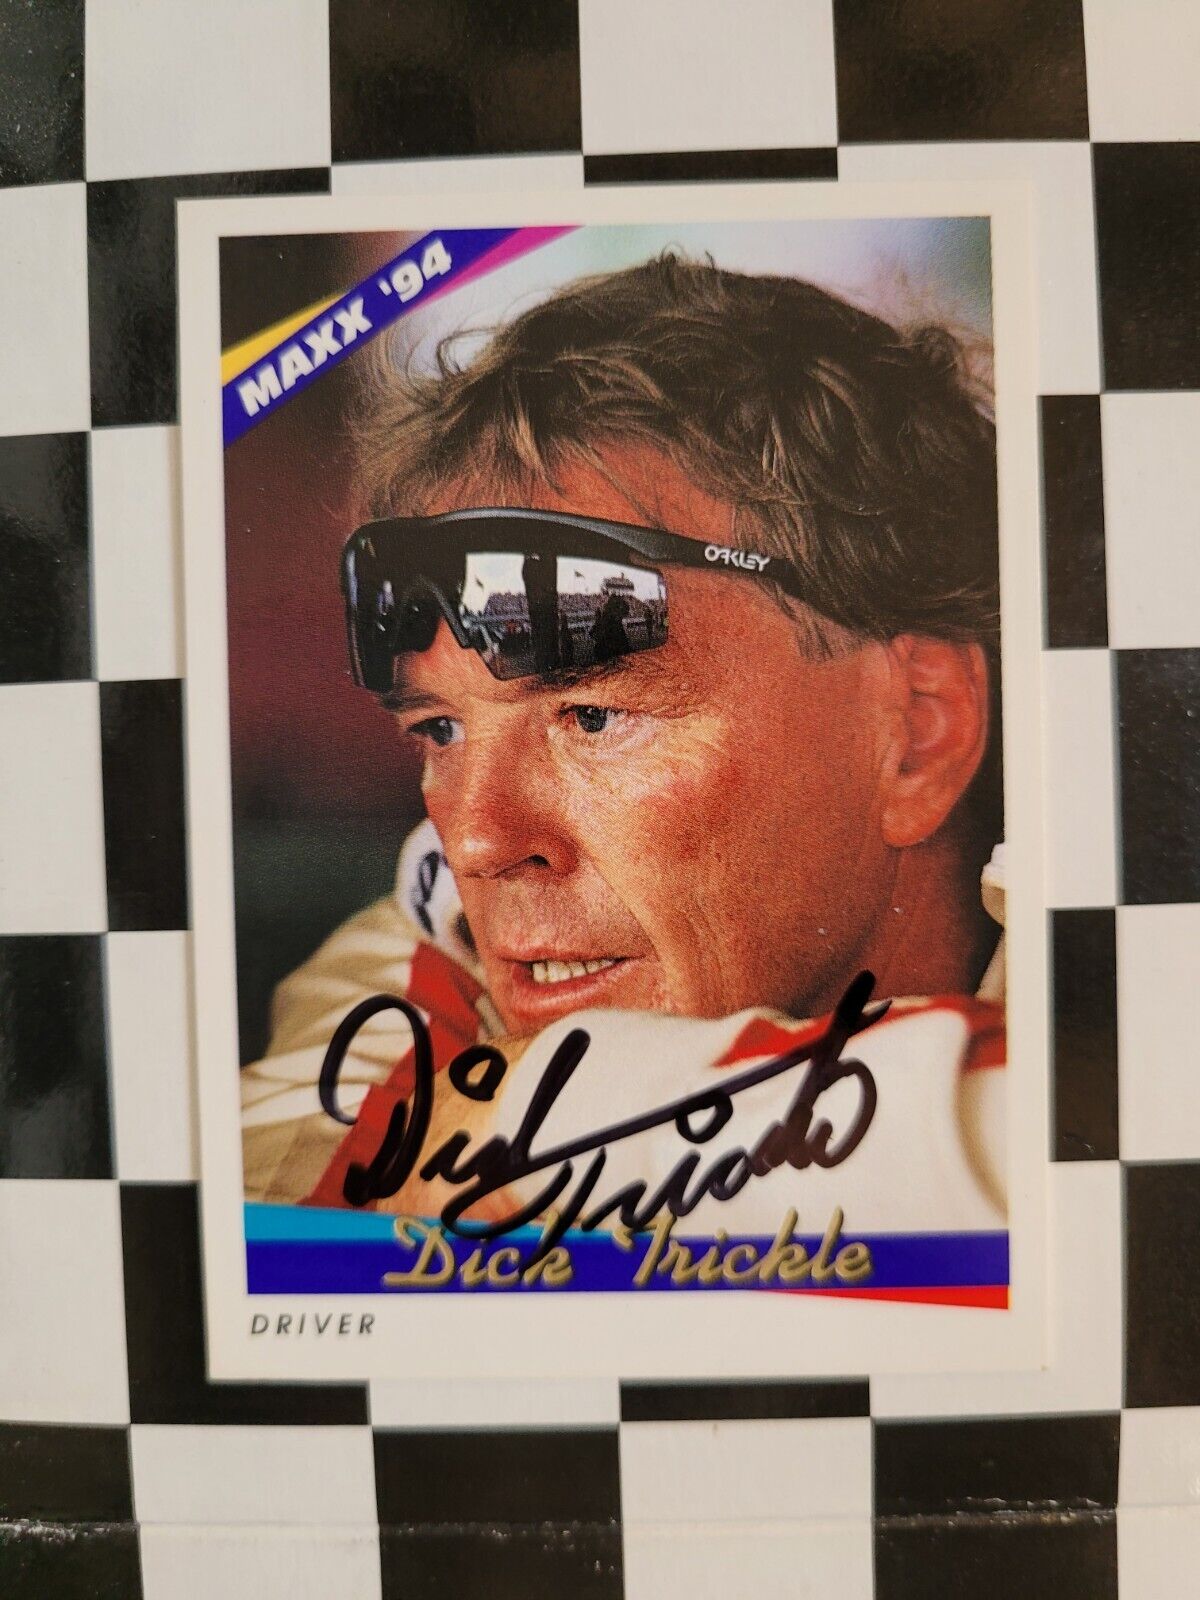 🏁🏆Dick Trickle Autographed NASCAR Card🏁🏆